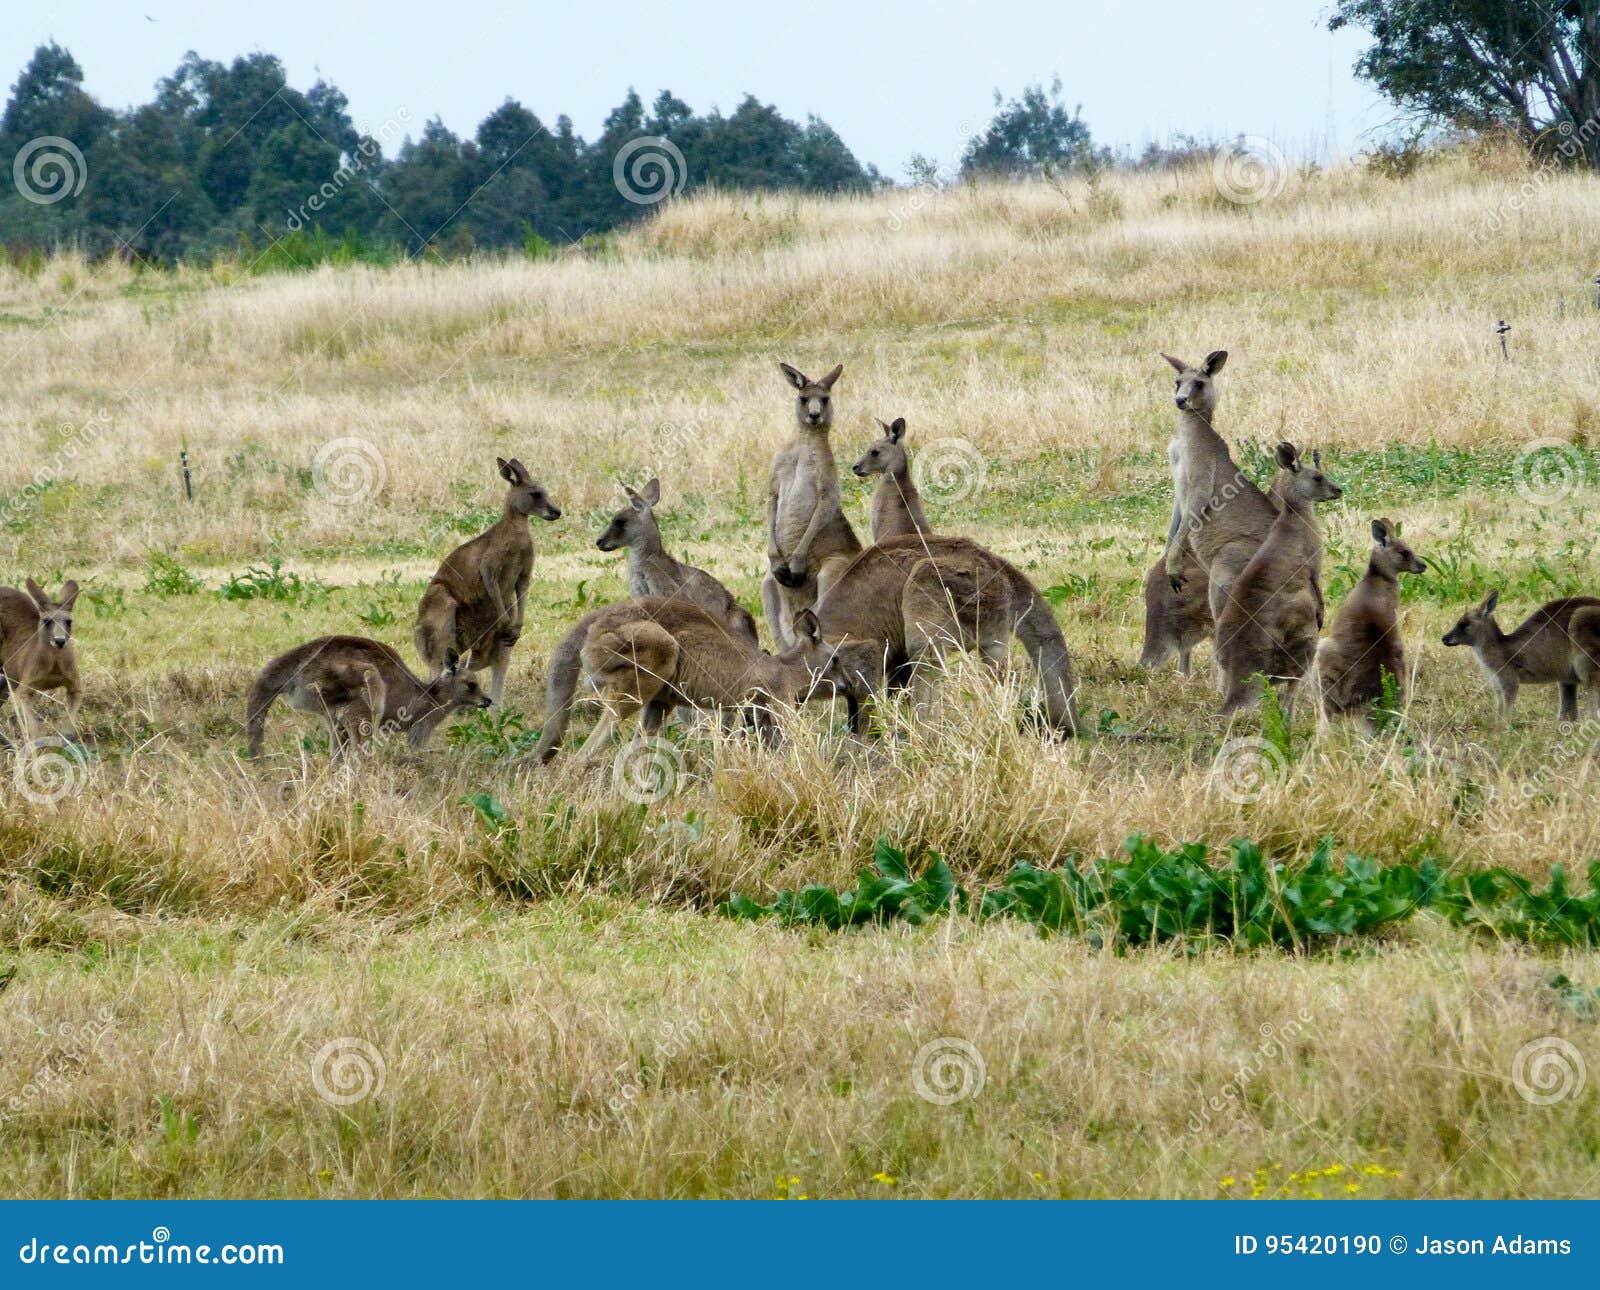 do kangaroos travel in packs